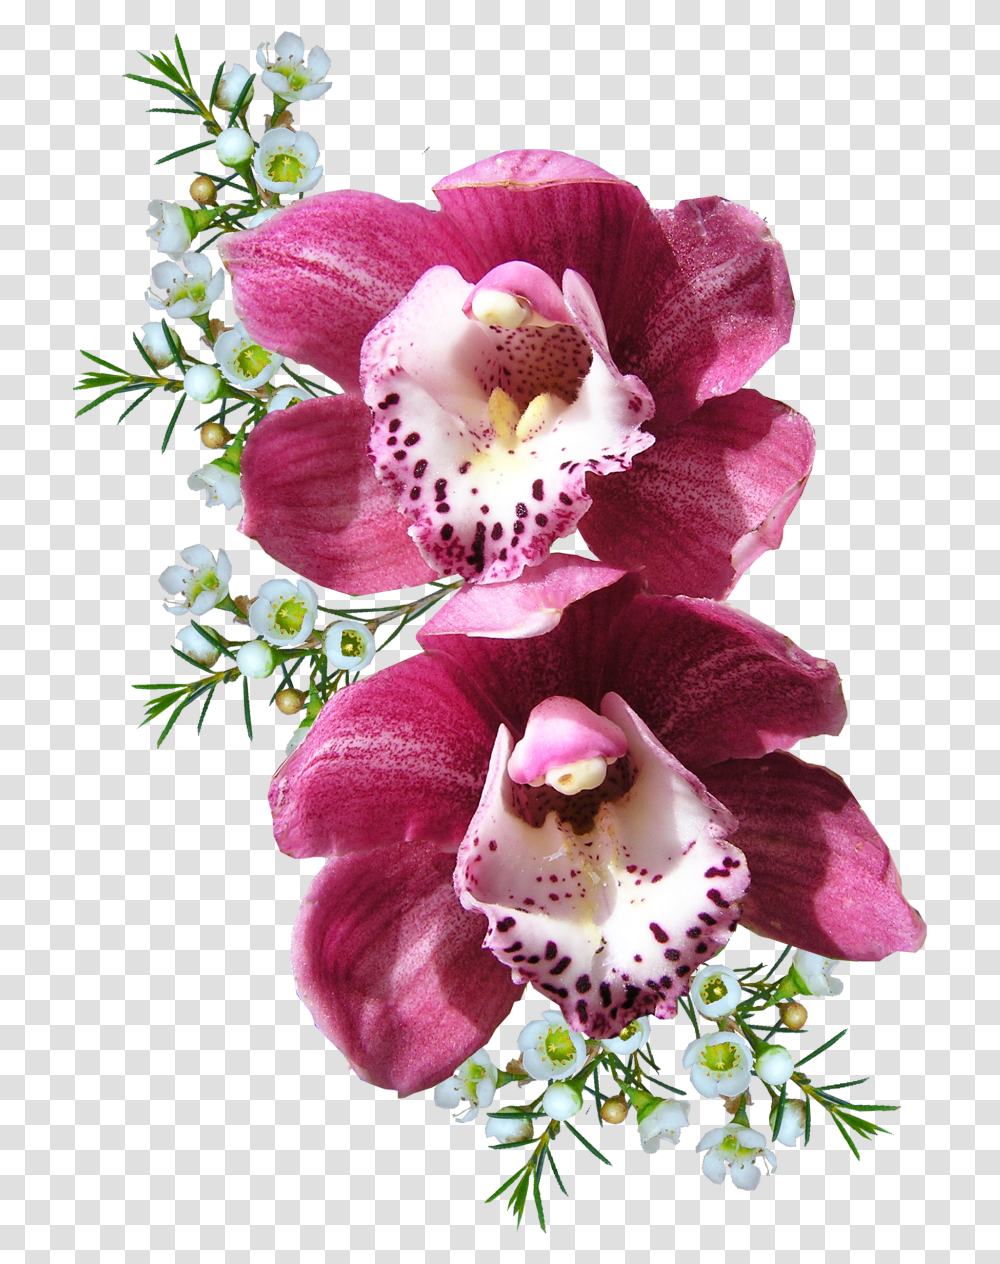 Orchid Flower Image Purepng Free Cc0 Background Flower Orchid, Plant, Blossom, Flower Arrangement, Rose Transparent Png